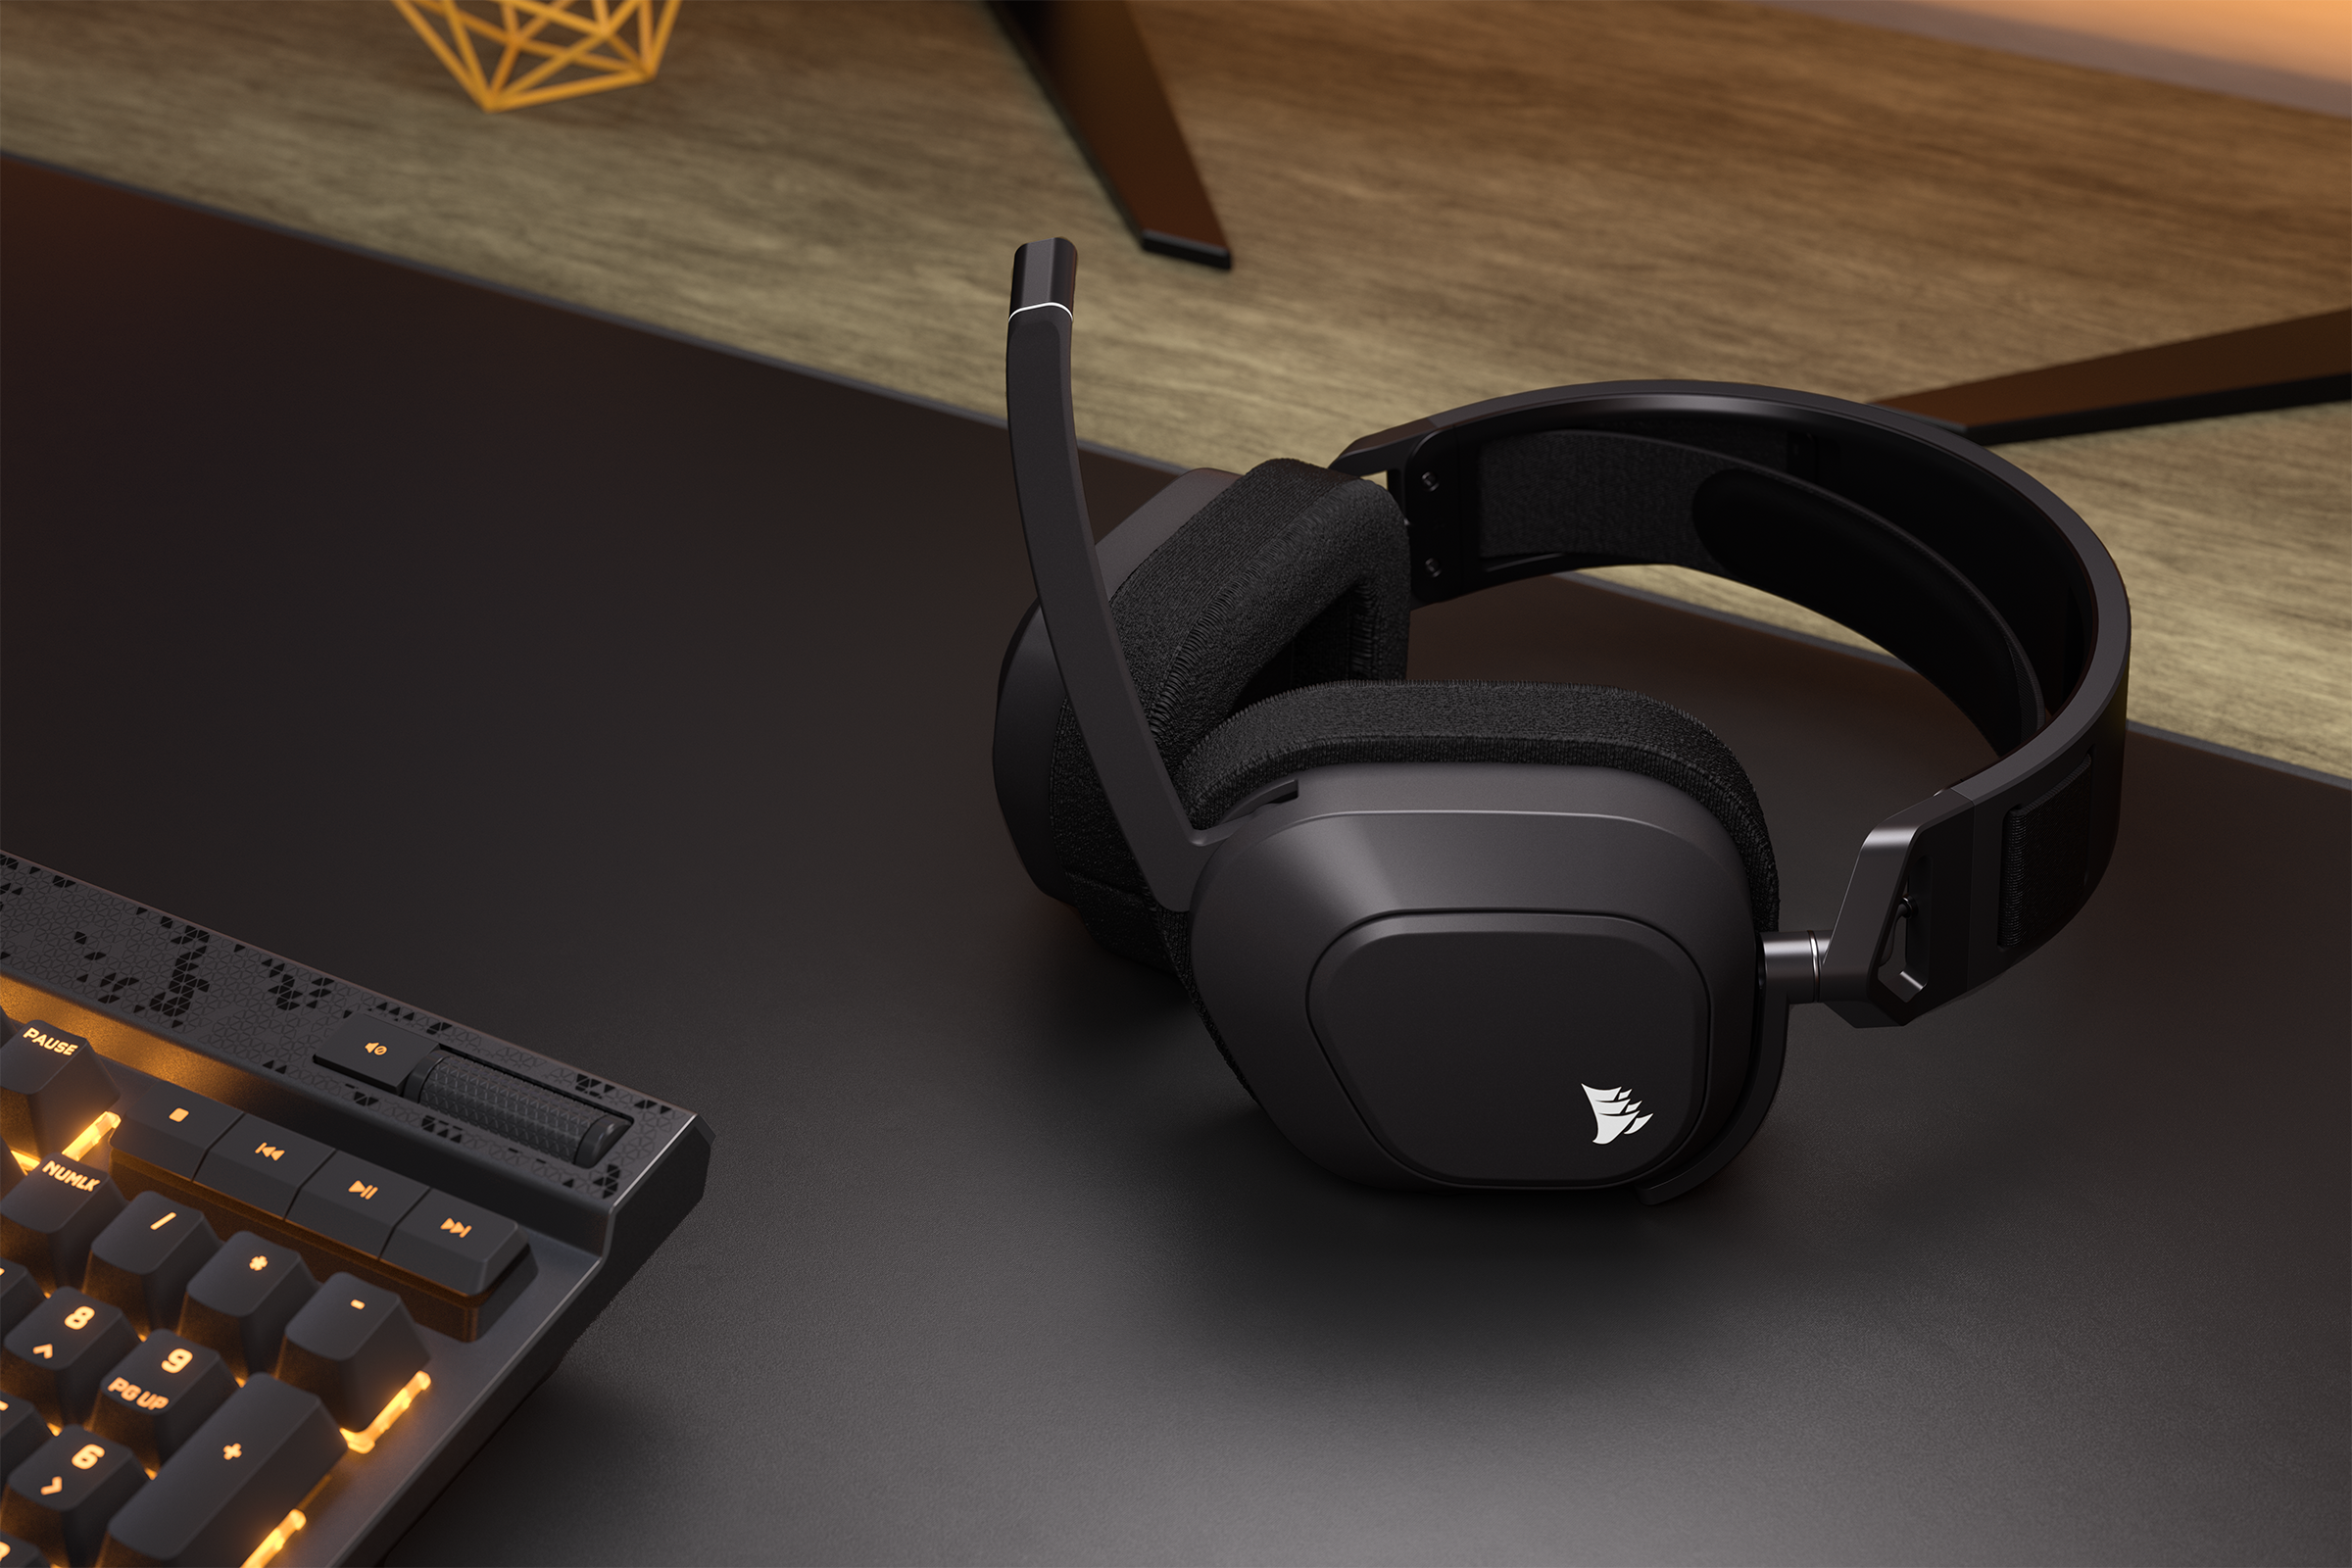 Corsair’s headset on a desk.